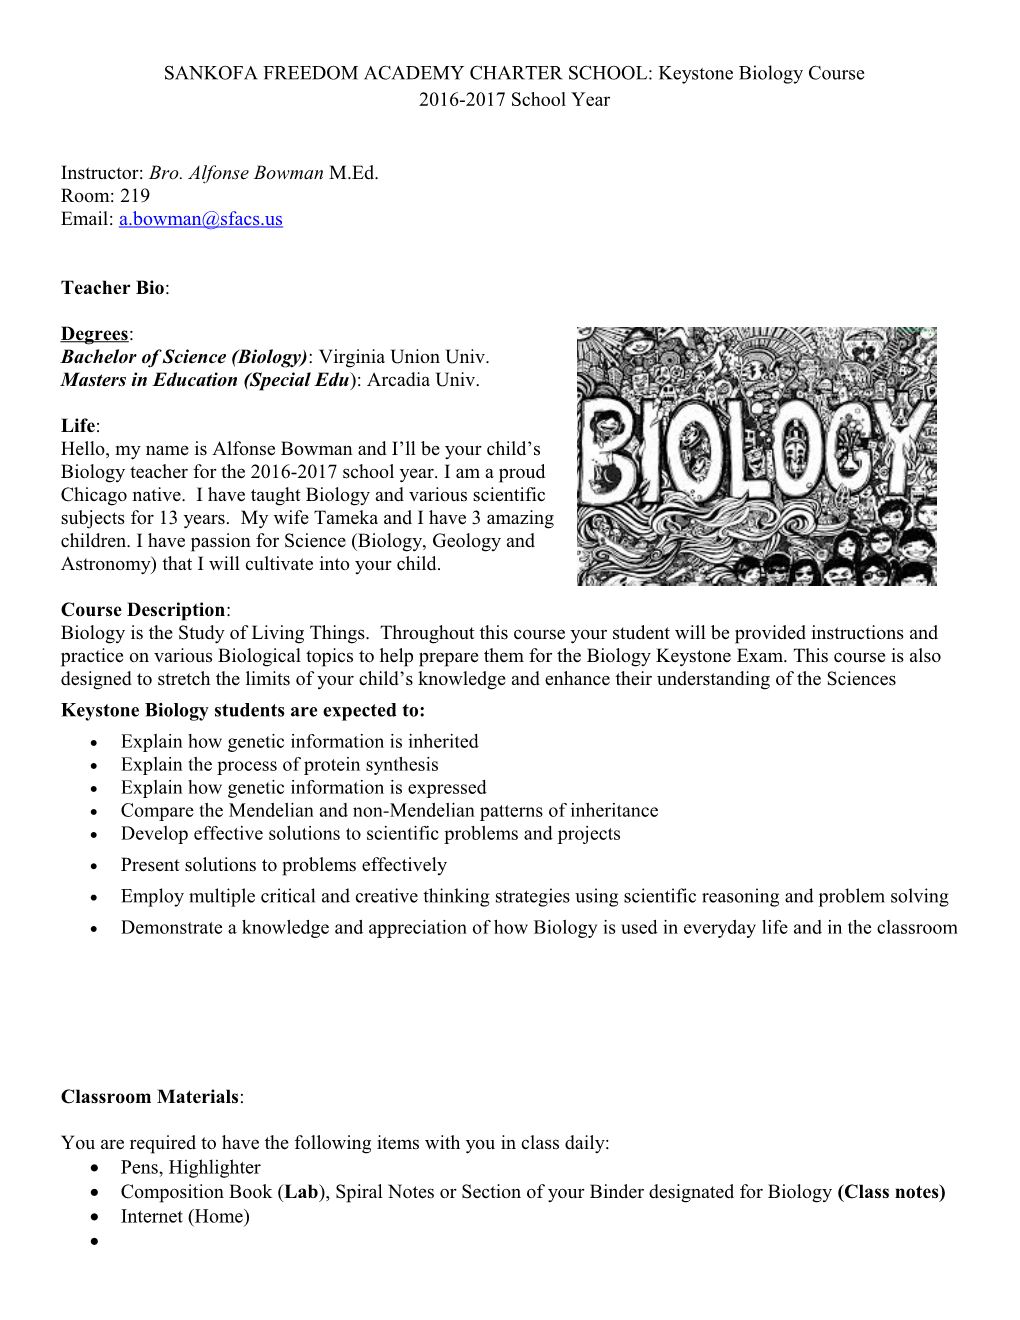 SANKOFA FREEDOM ACADEMY CHARTER SCHOOL: Keystone Biology Course